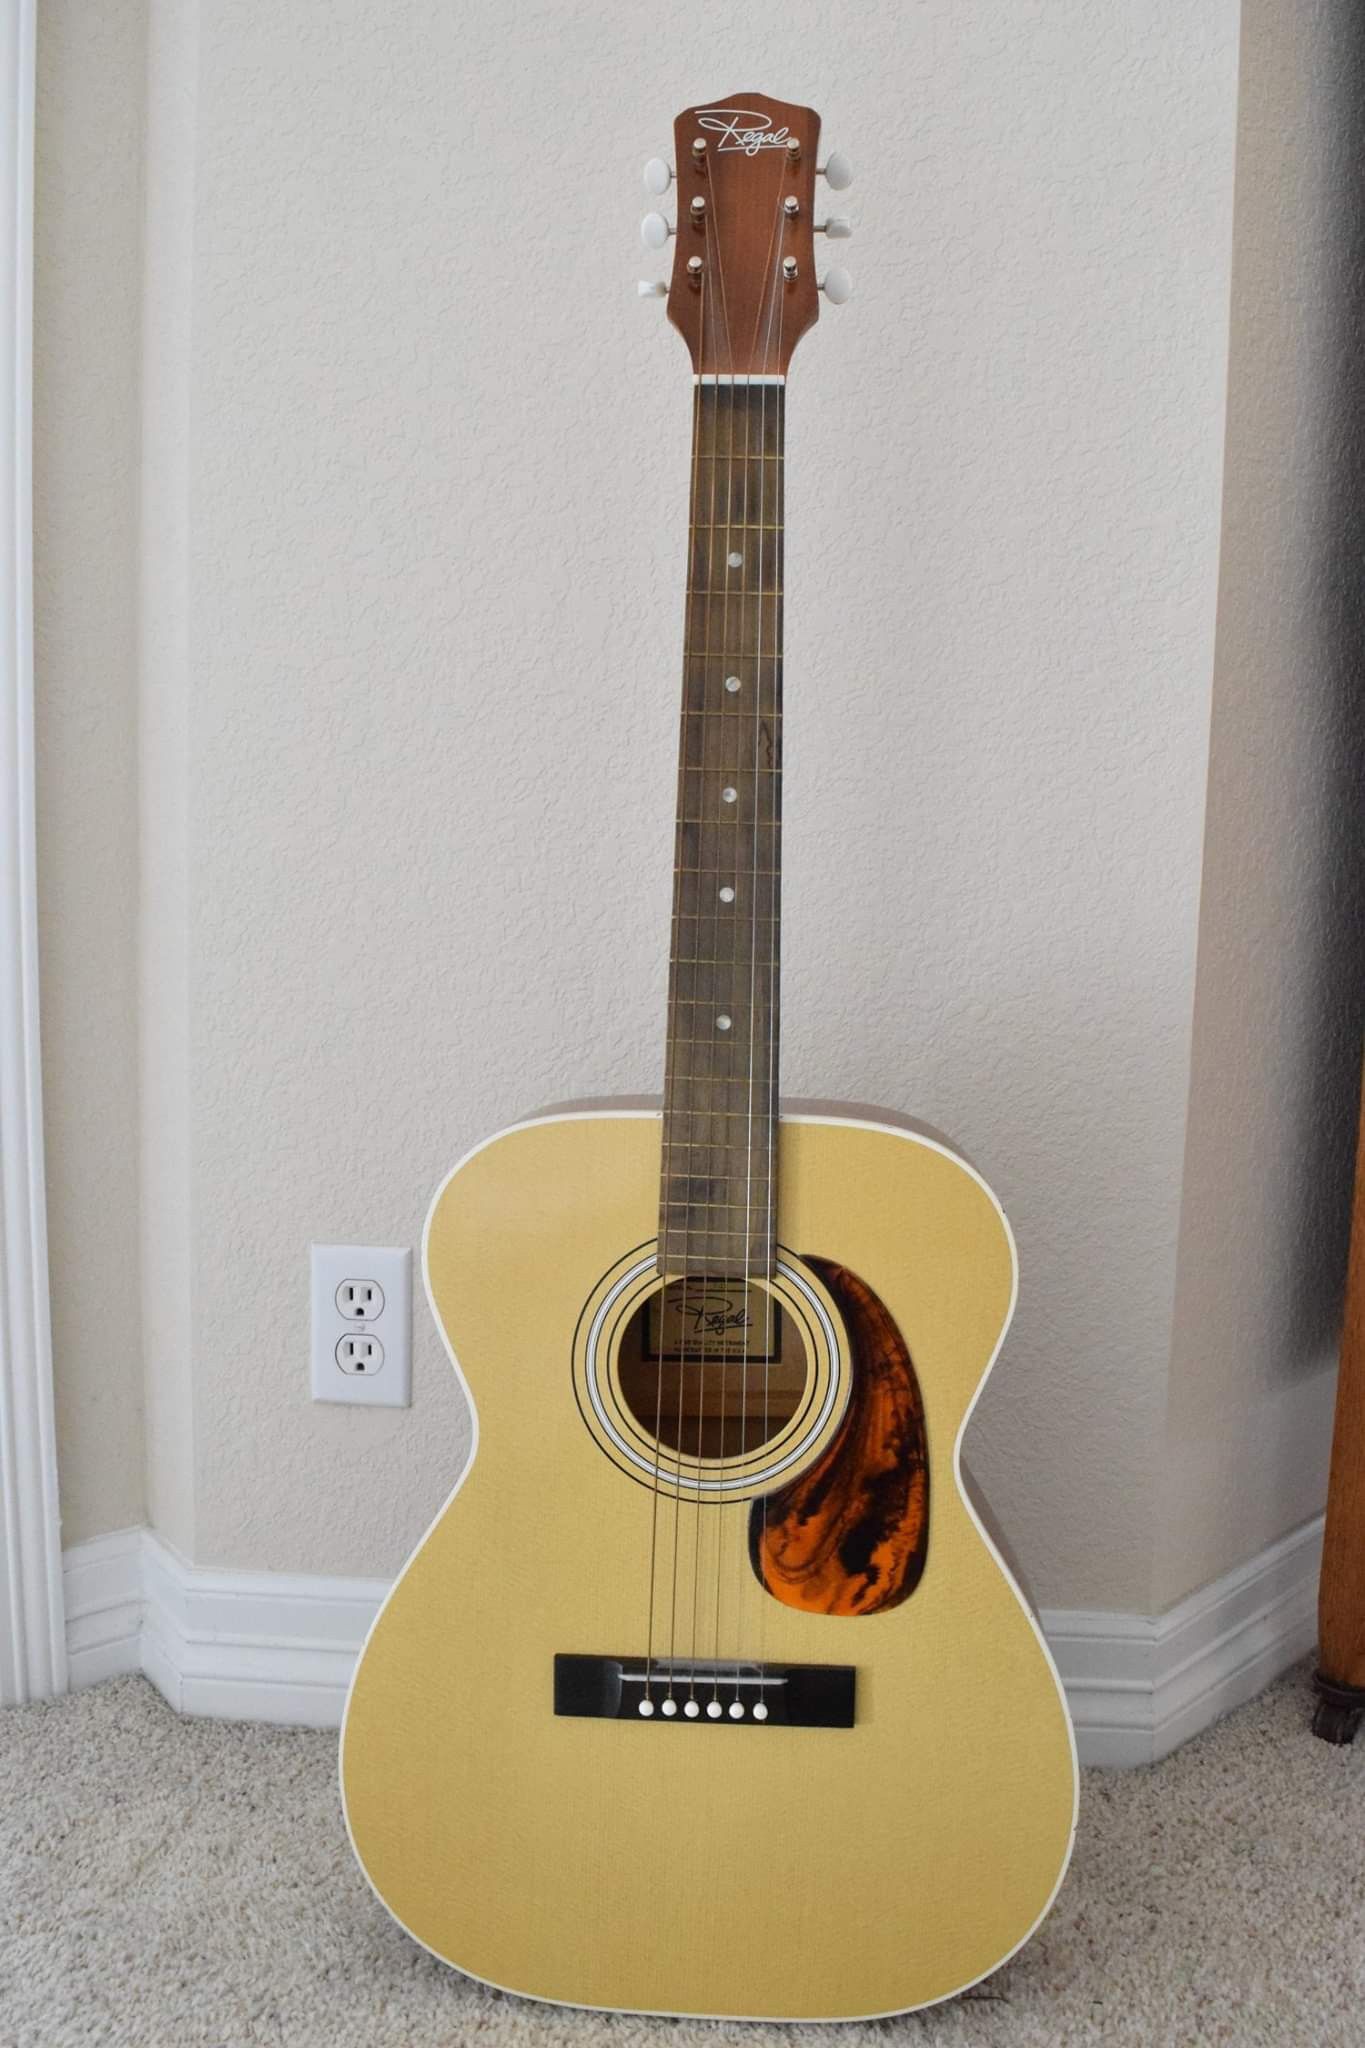 Regal T-13 Acoustic Guitar 1970-1980